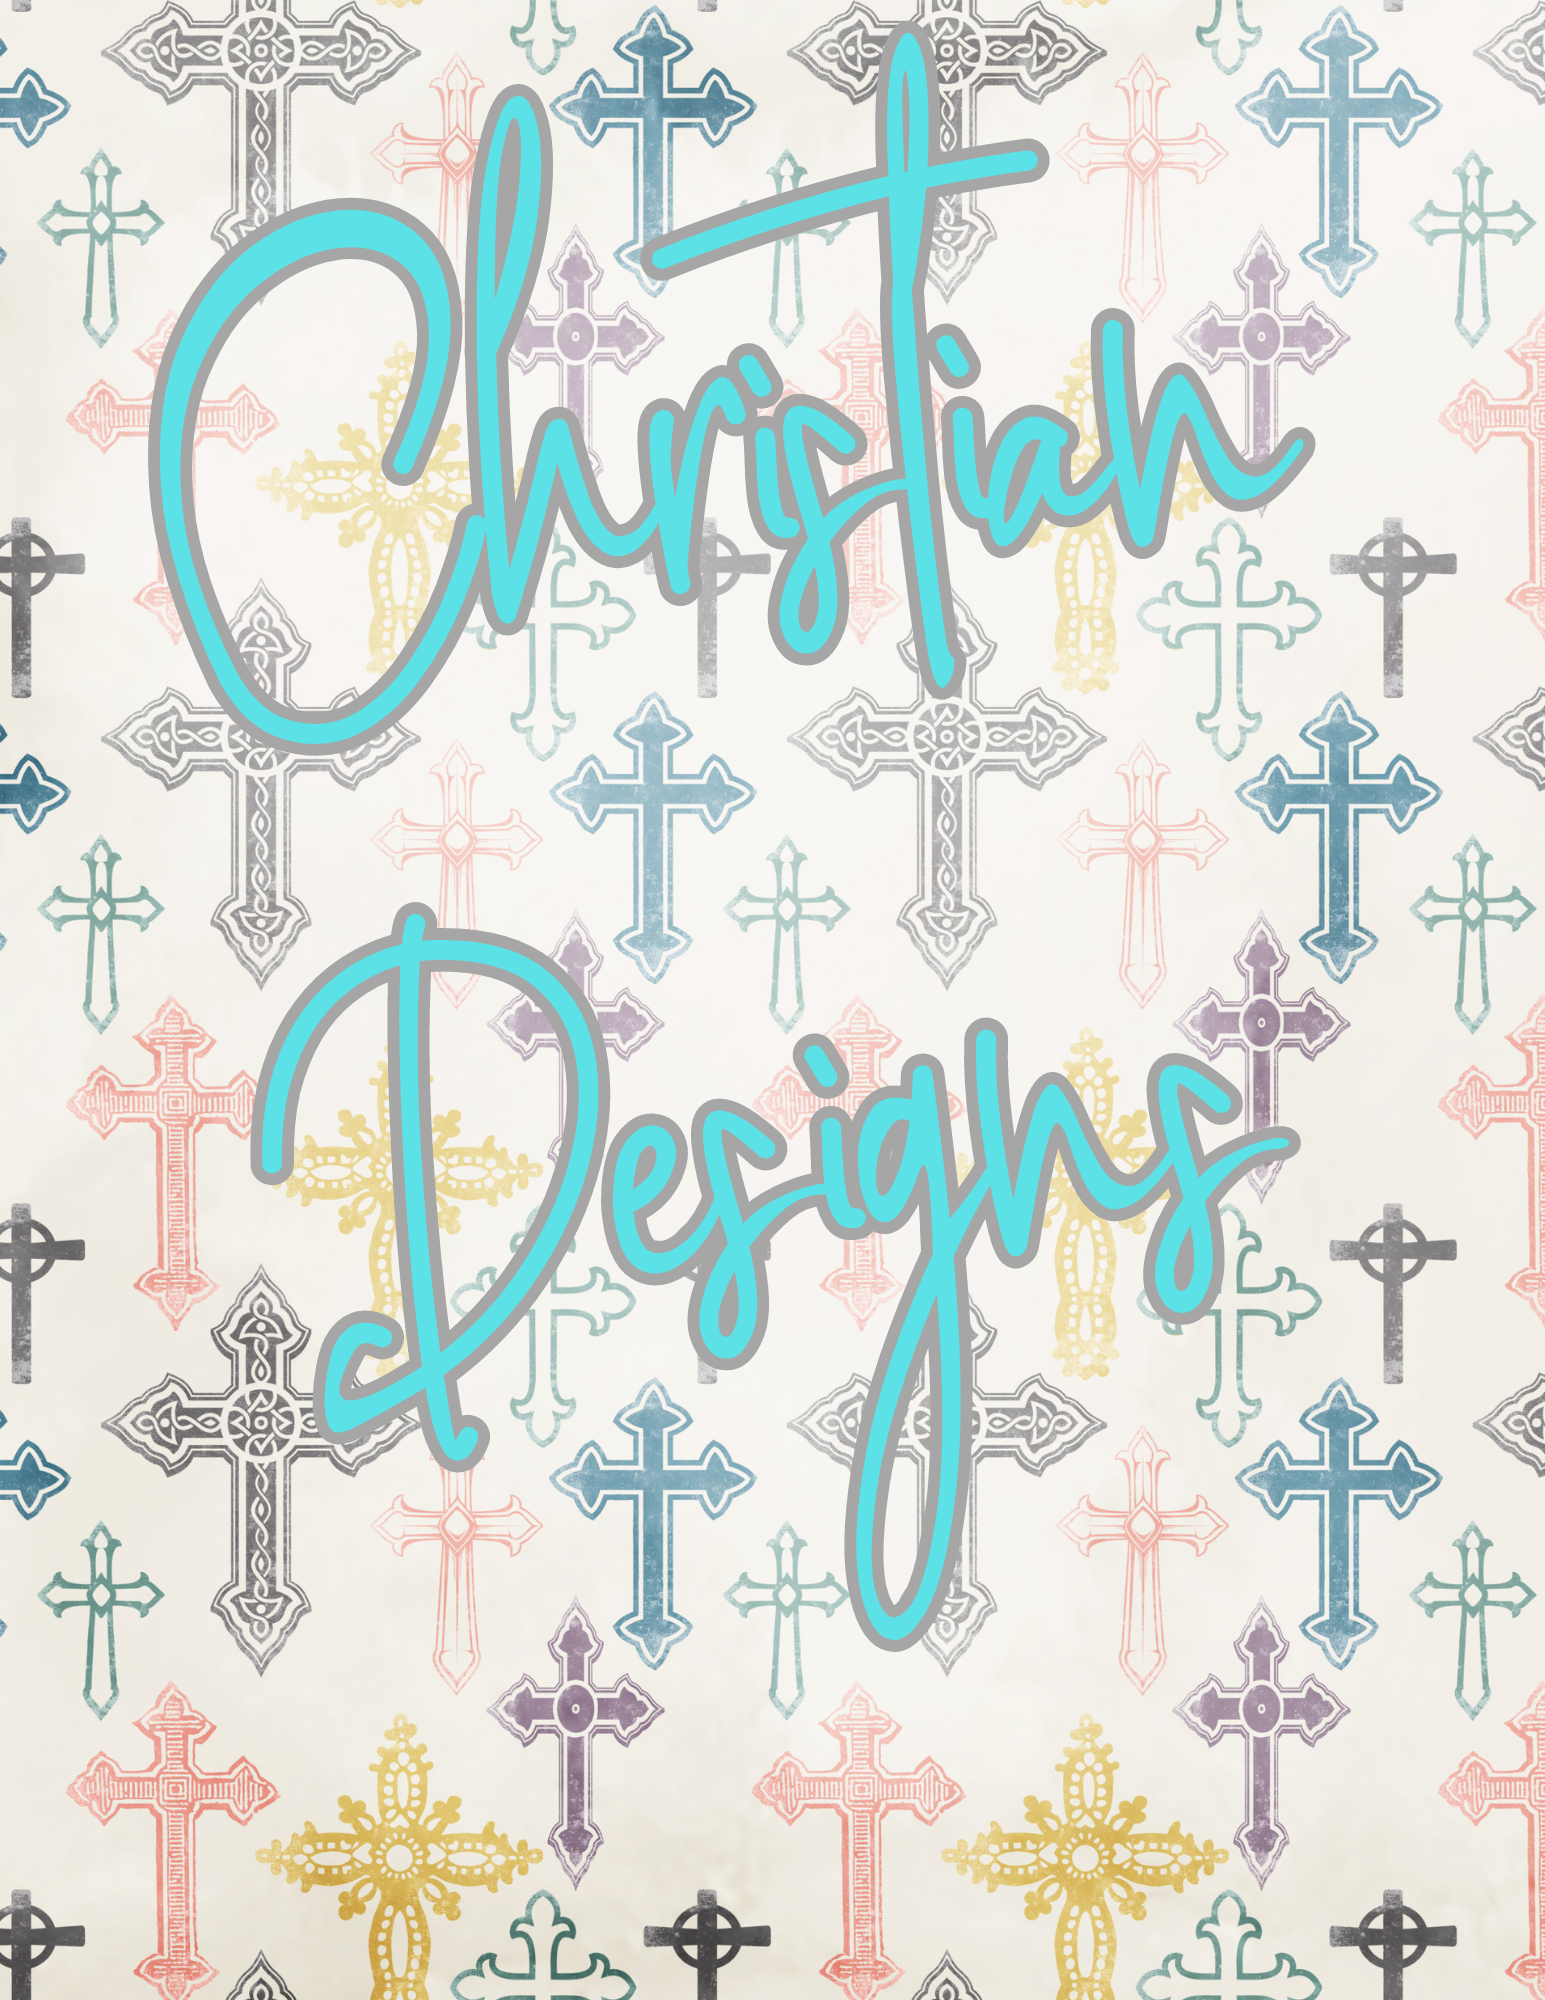 Christian Designs